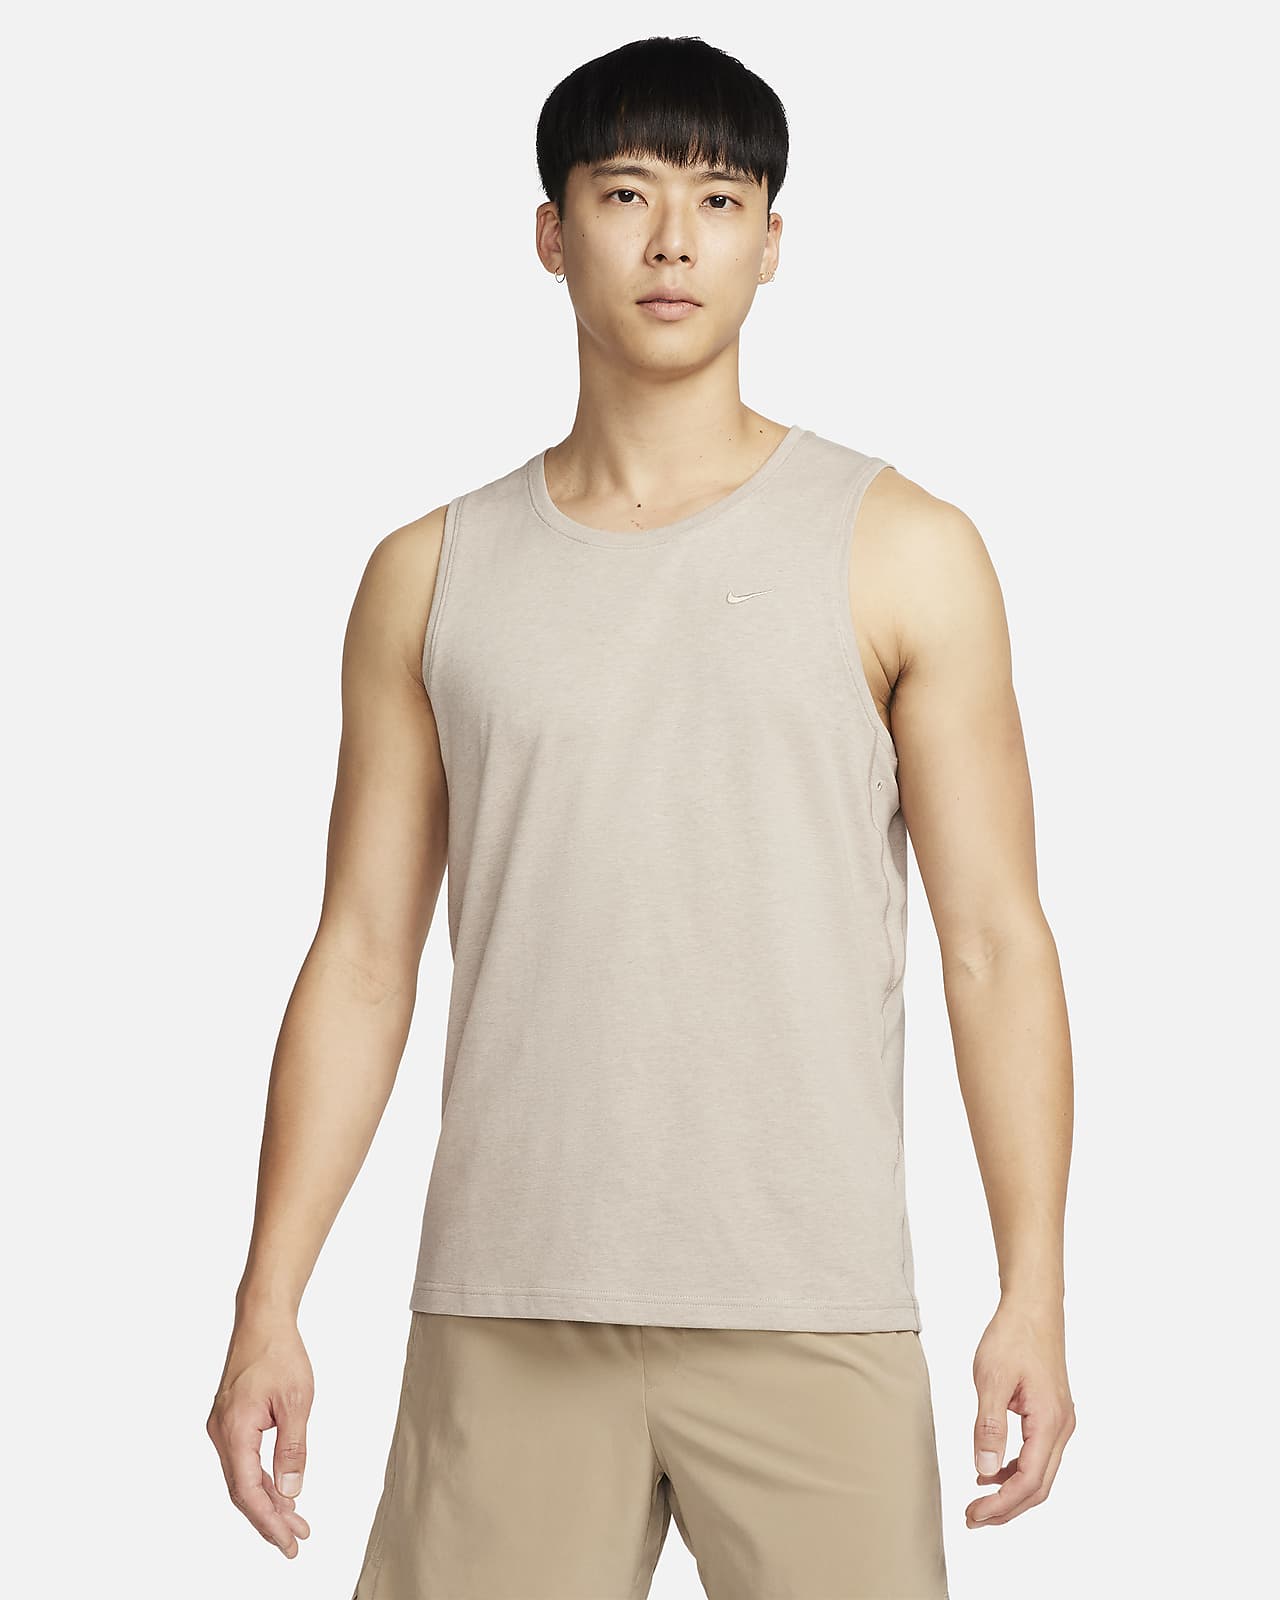 Men's Sleeveless/Tank Hoodies & Sweatshirts. Nike CA